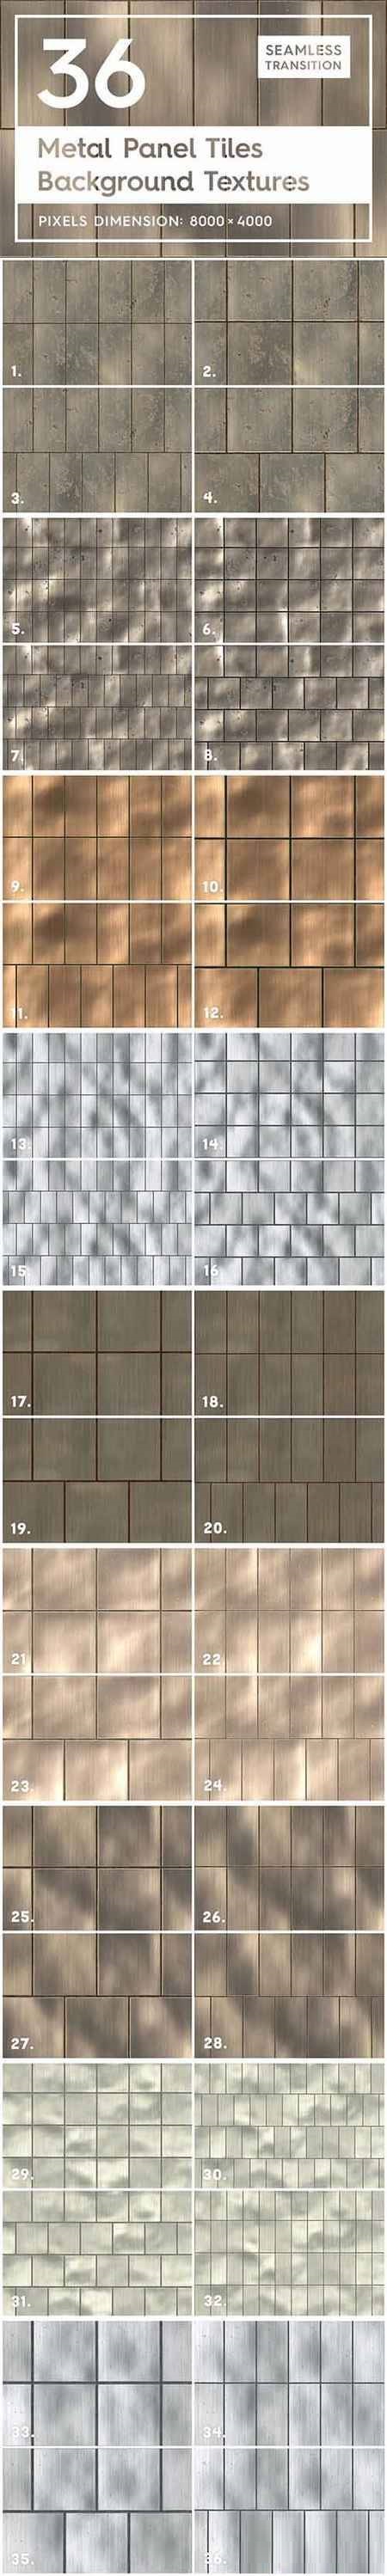 36 Metal Panel Tiles Backgrounds 2165124